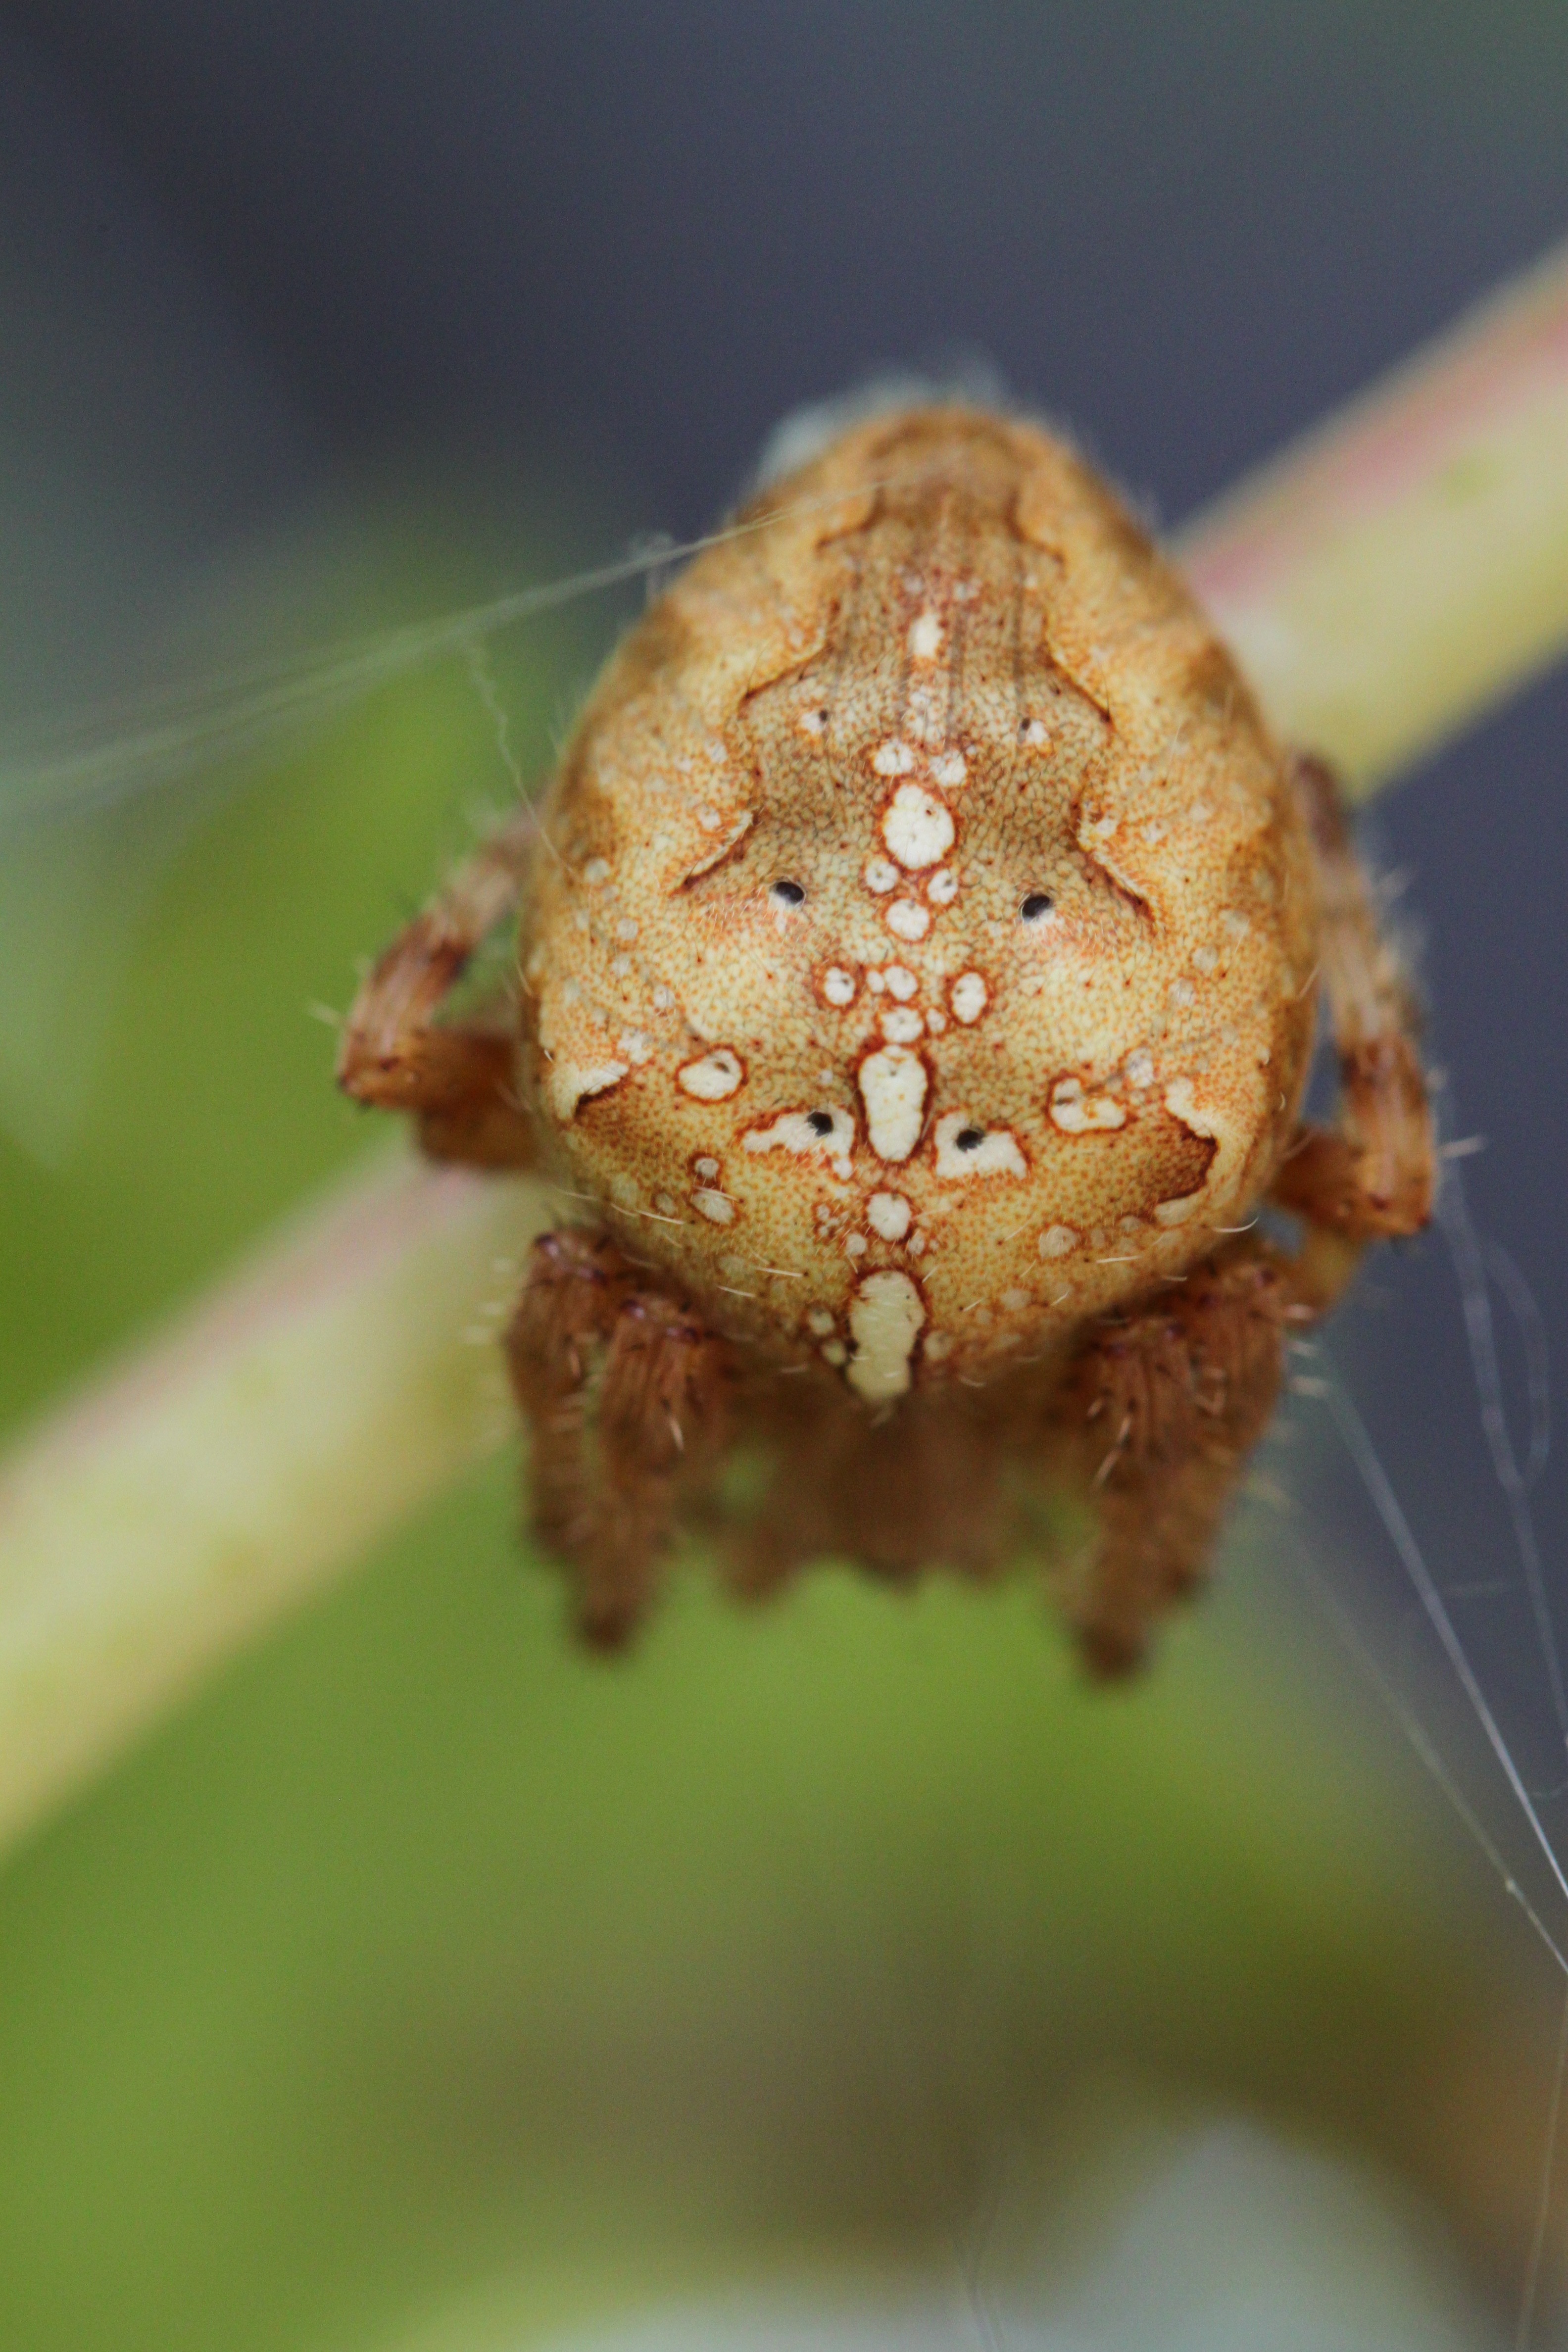 argiope spider